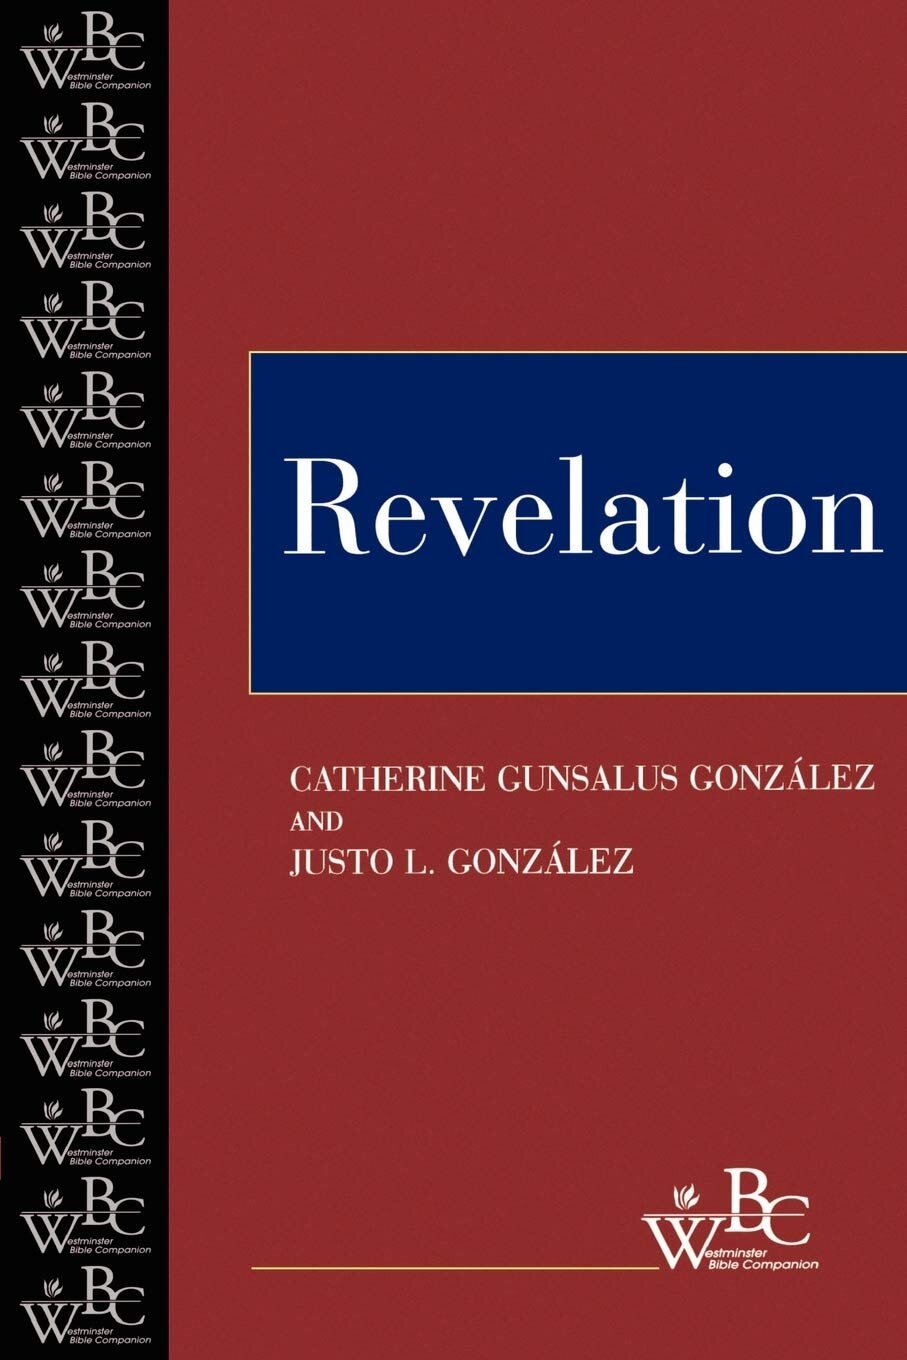 Revelation (Westminster Bible Companion | WeBC)